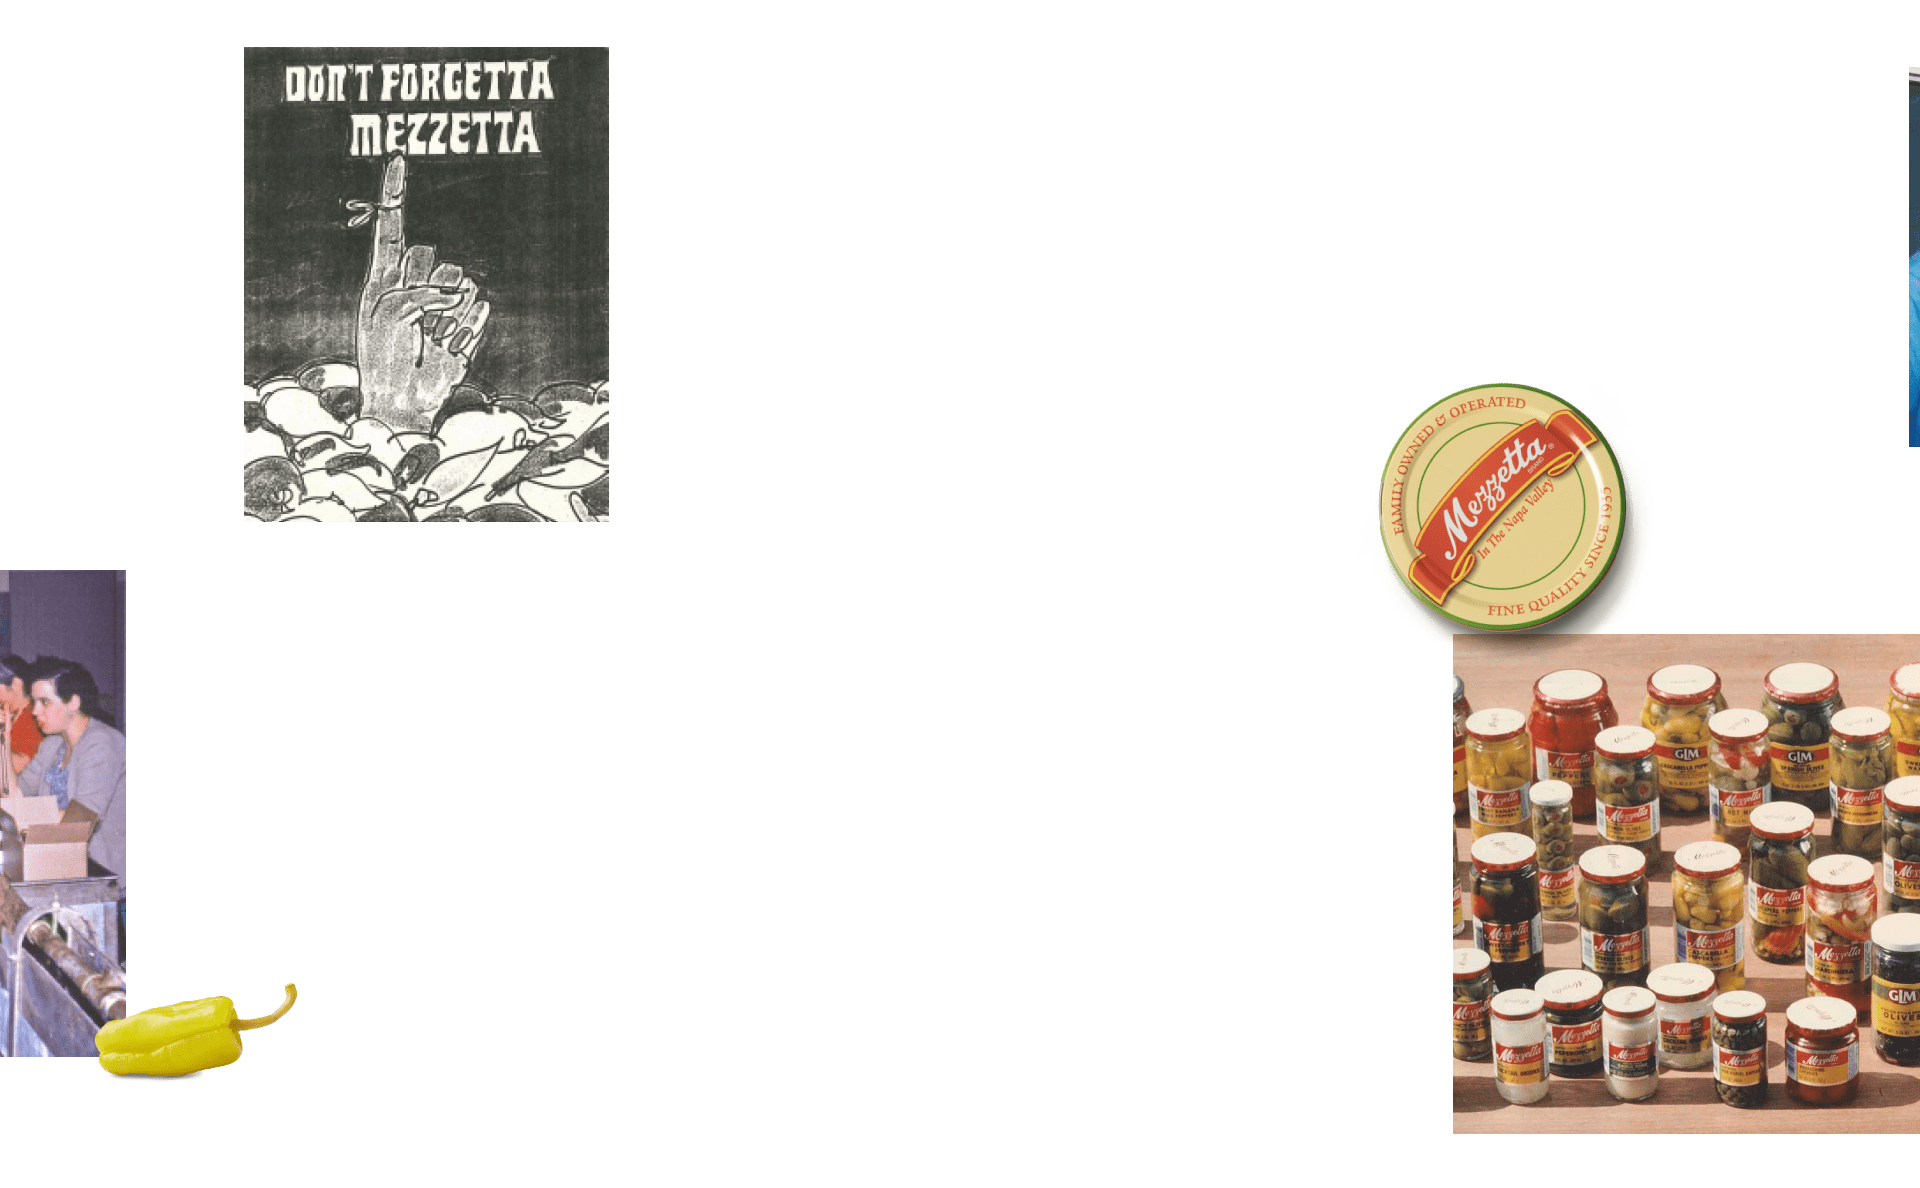 Vintage Mezzetta poster and vintage jars